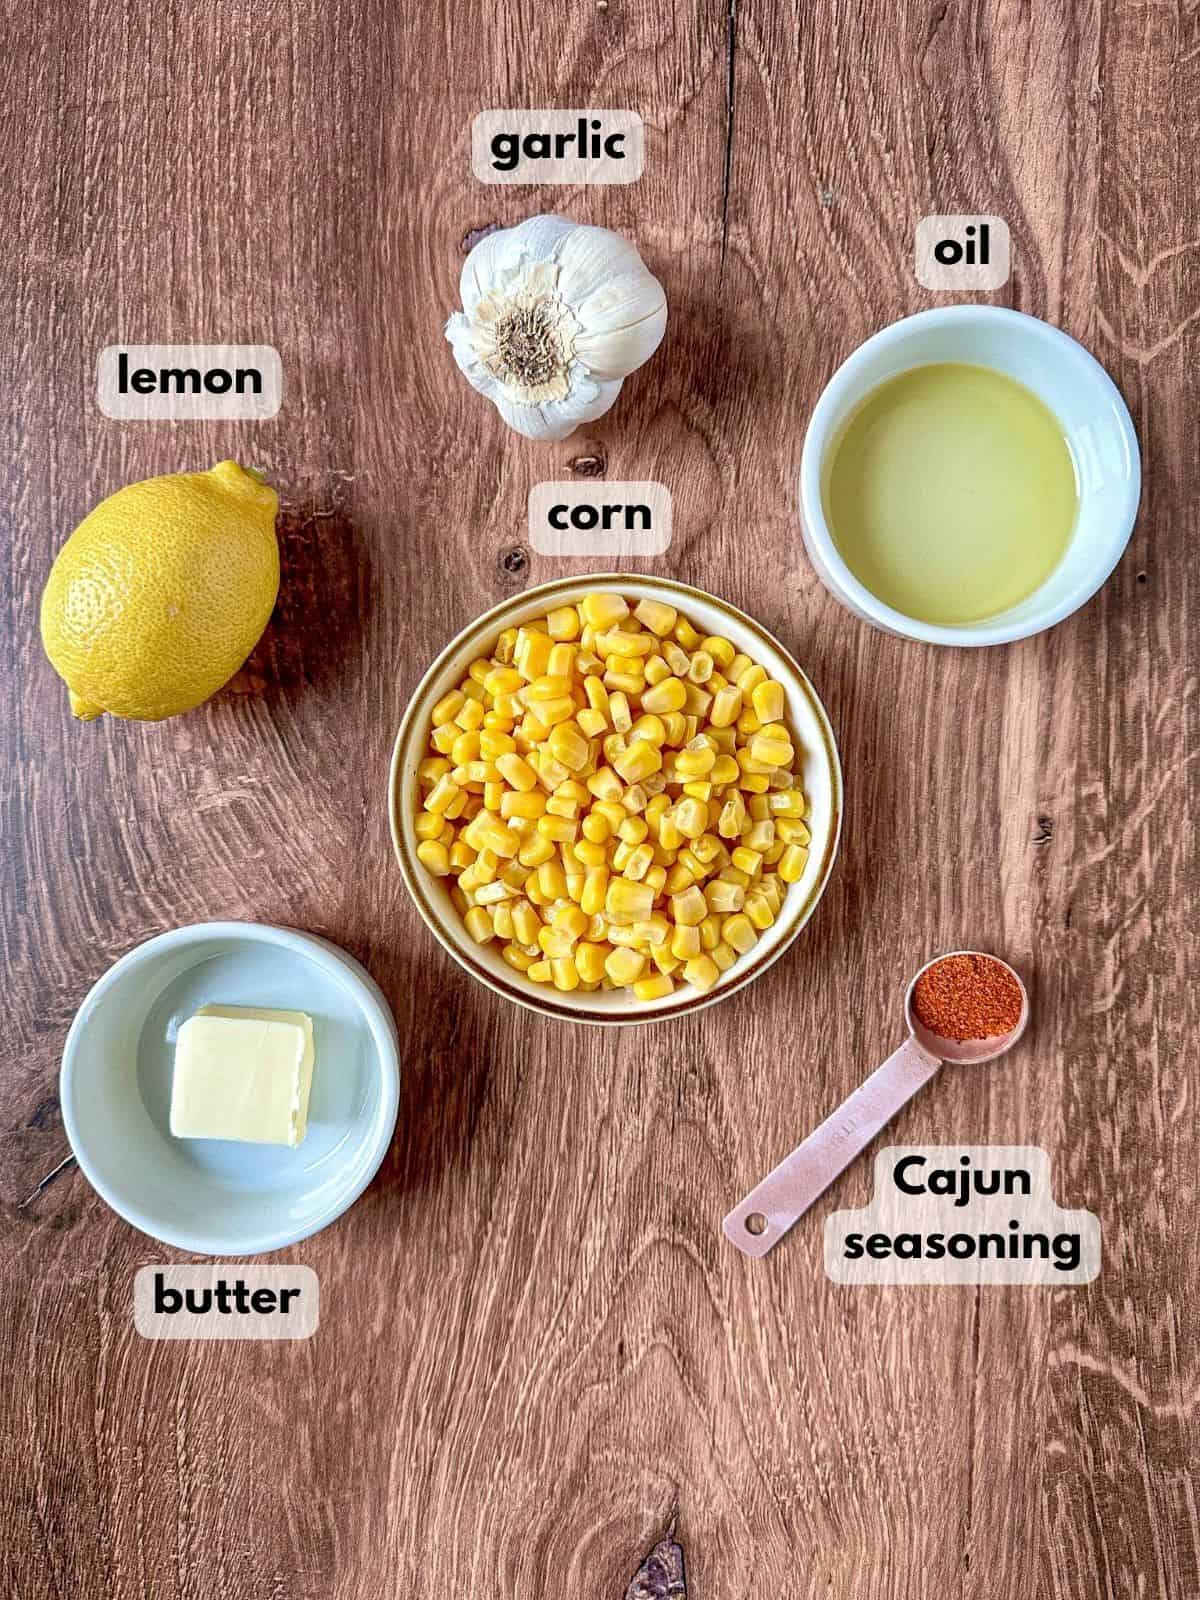 Ingredients need to make blackened corn on wooden table: corn kernels, garlic, butter, oil, lemon, and Cajun seasonings.